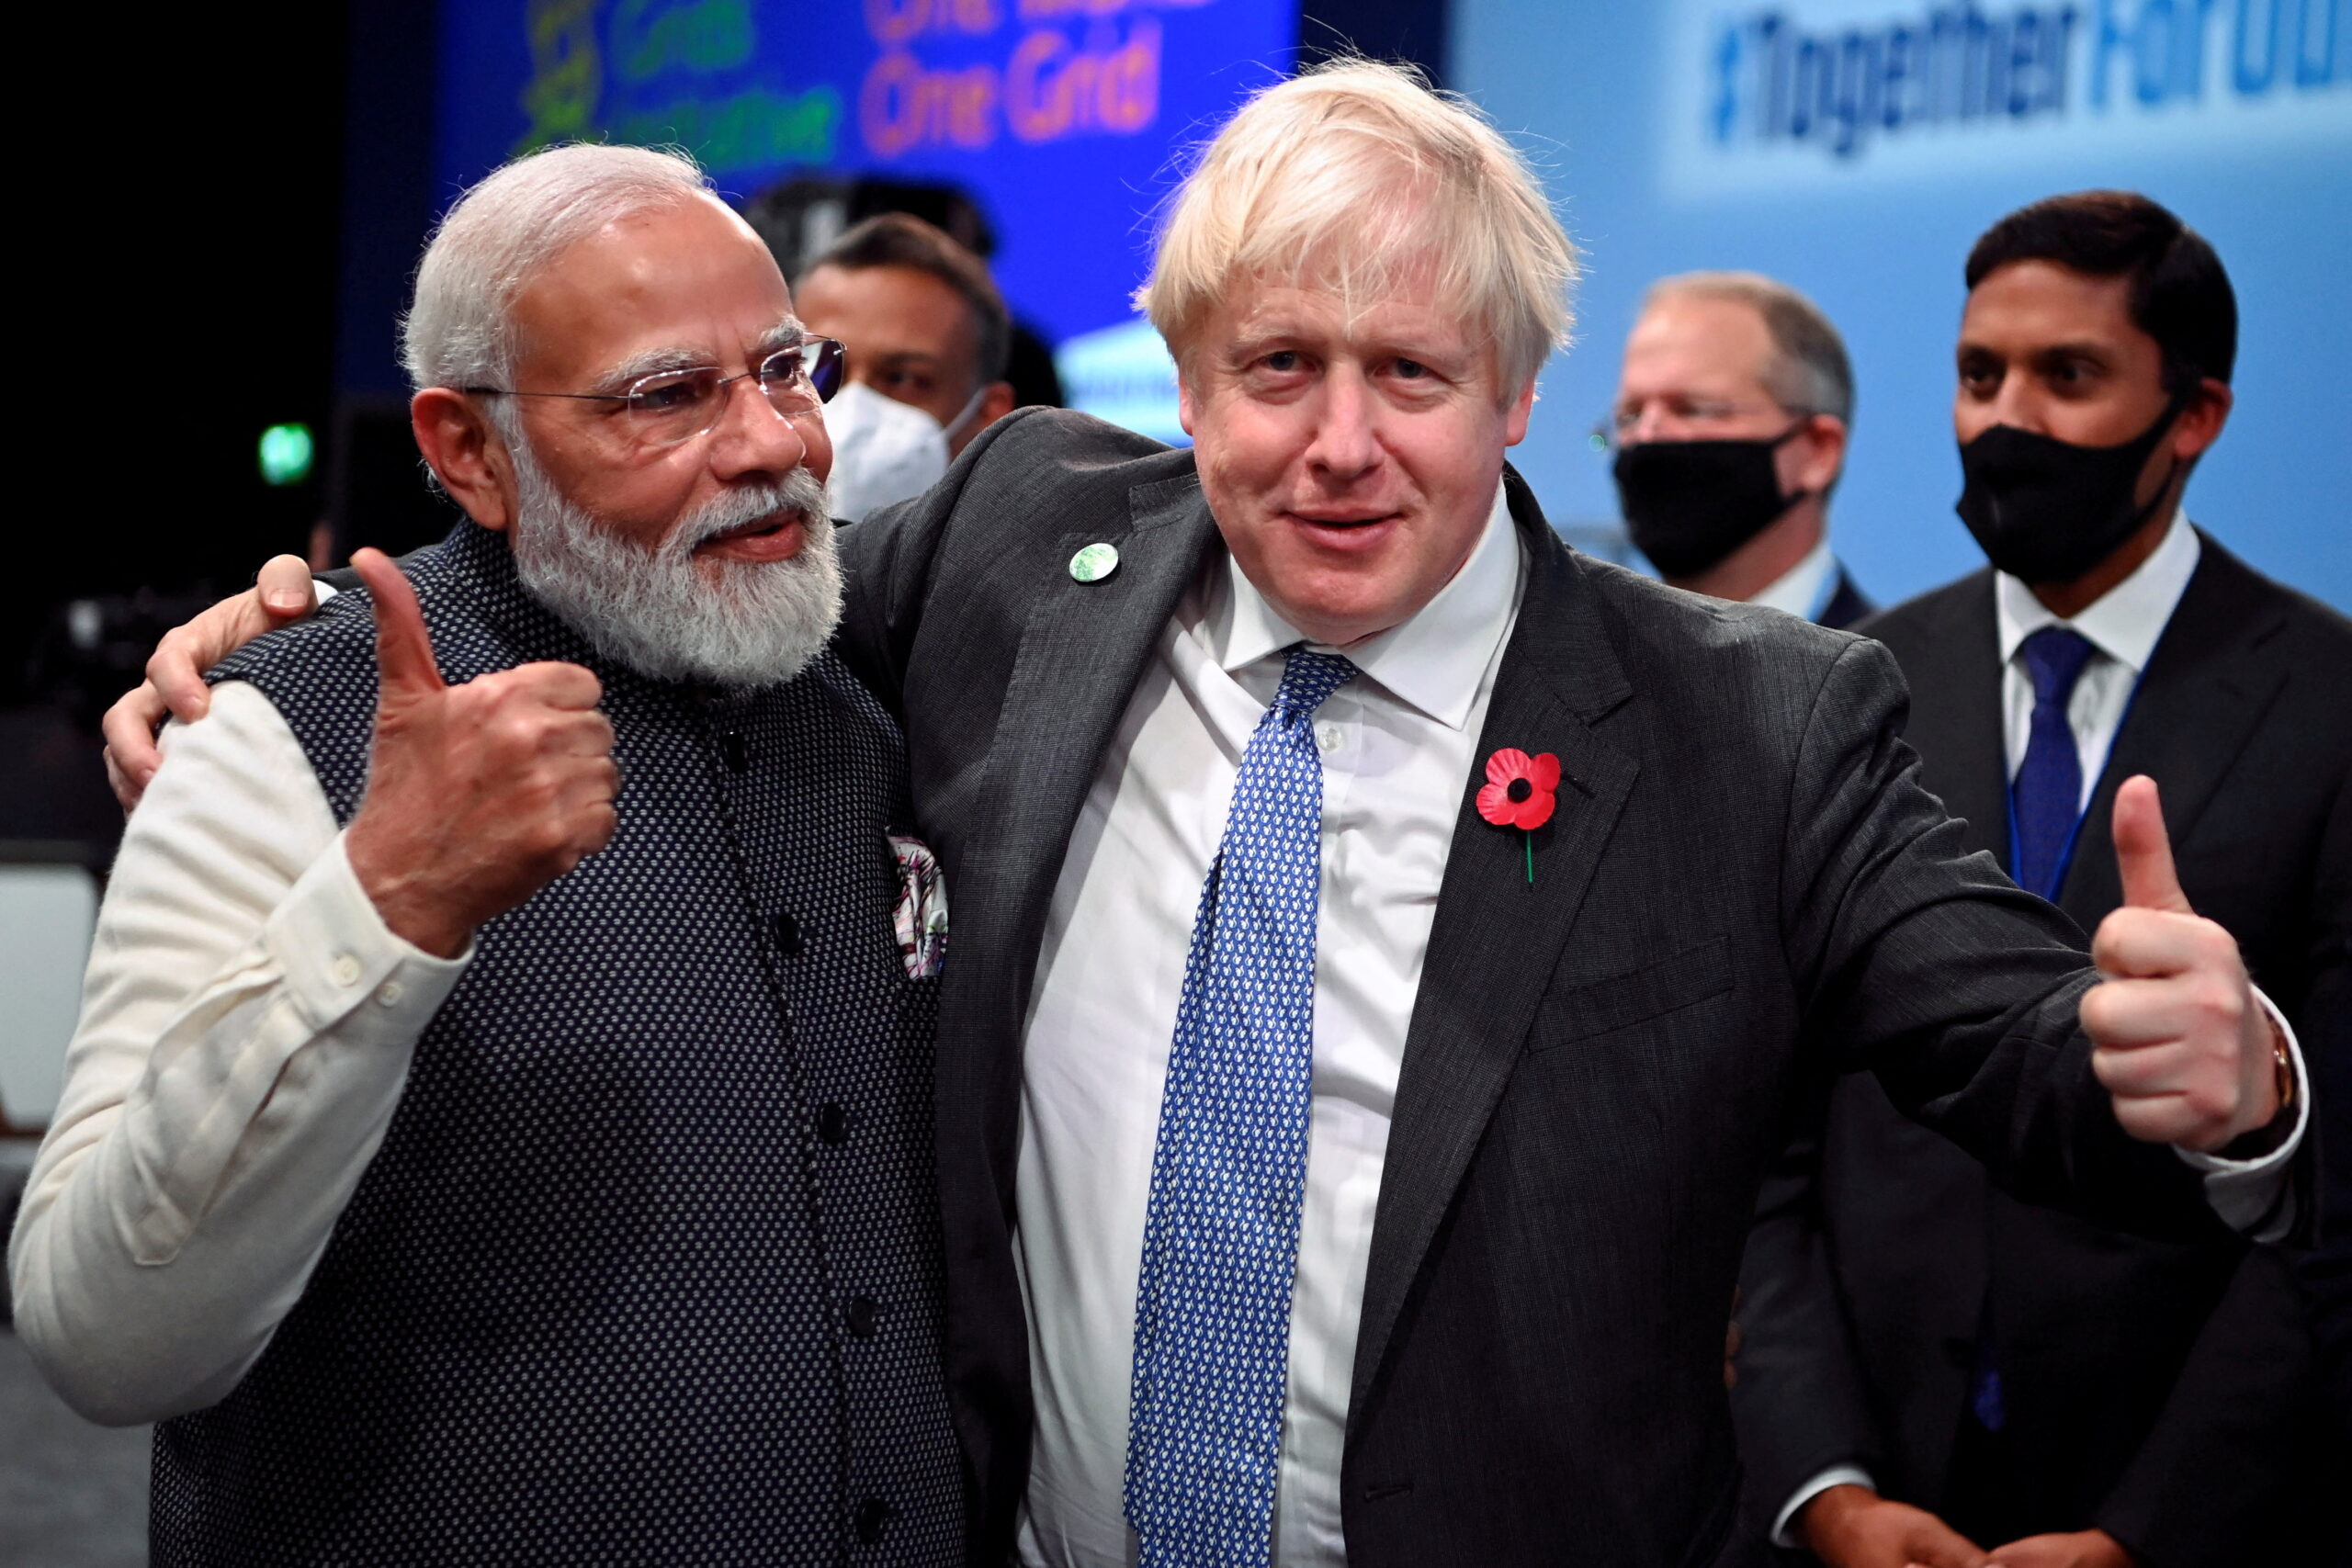 Boris Johnson to visit Ahmedabad, talk with PM Modi on peace and prosperity